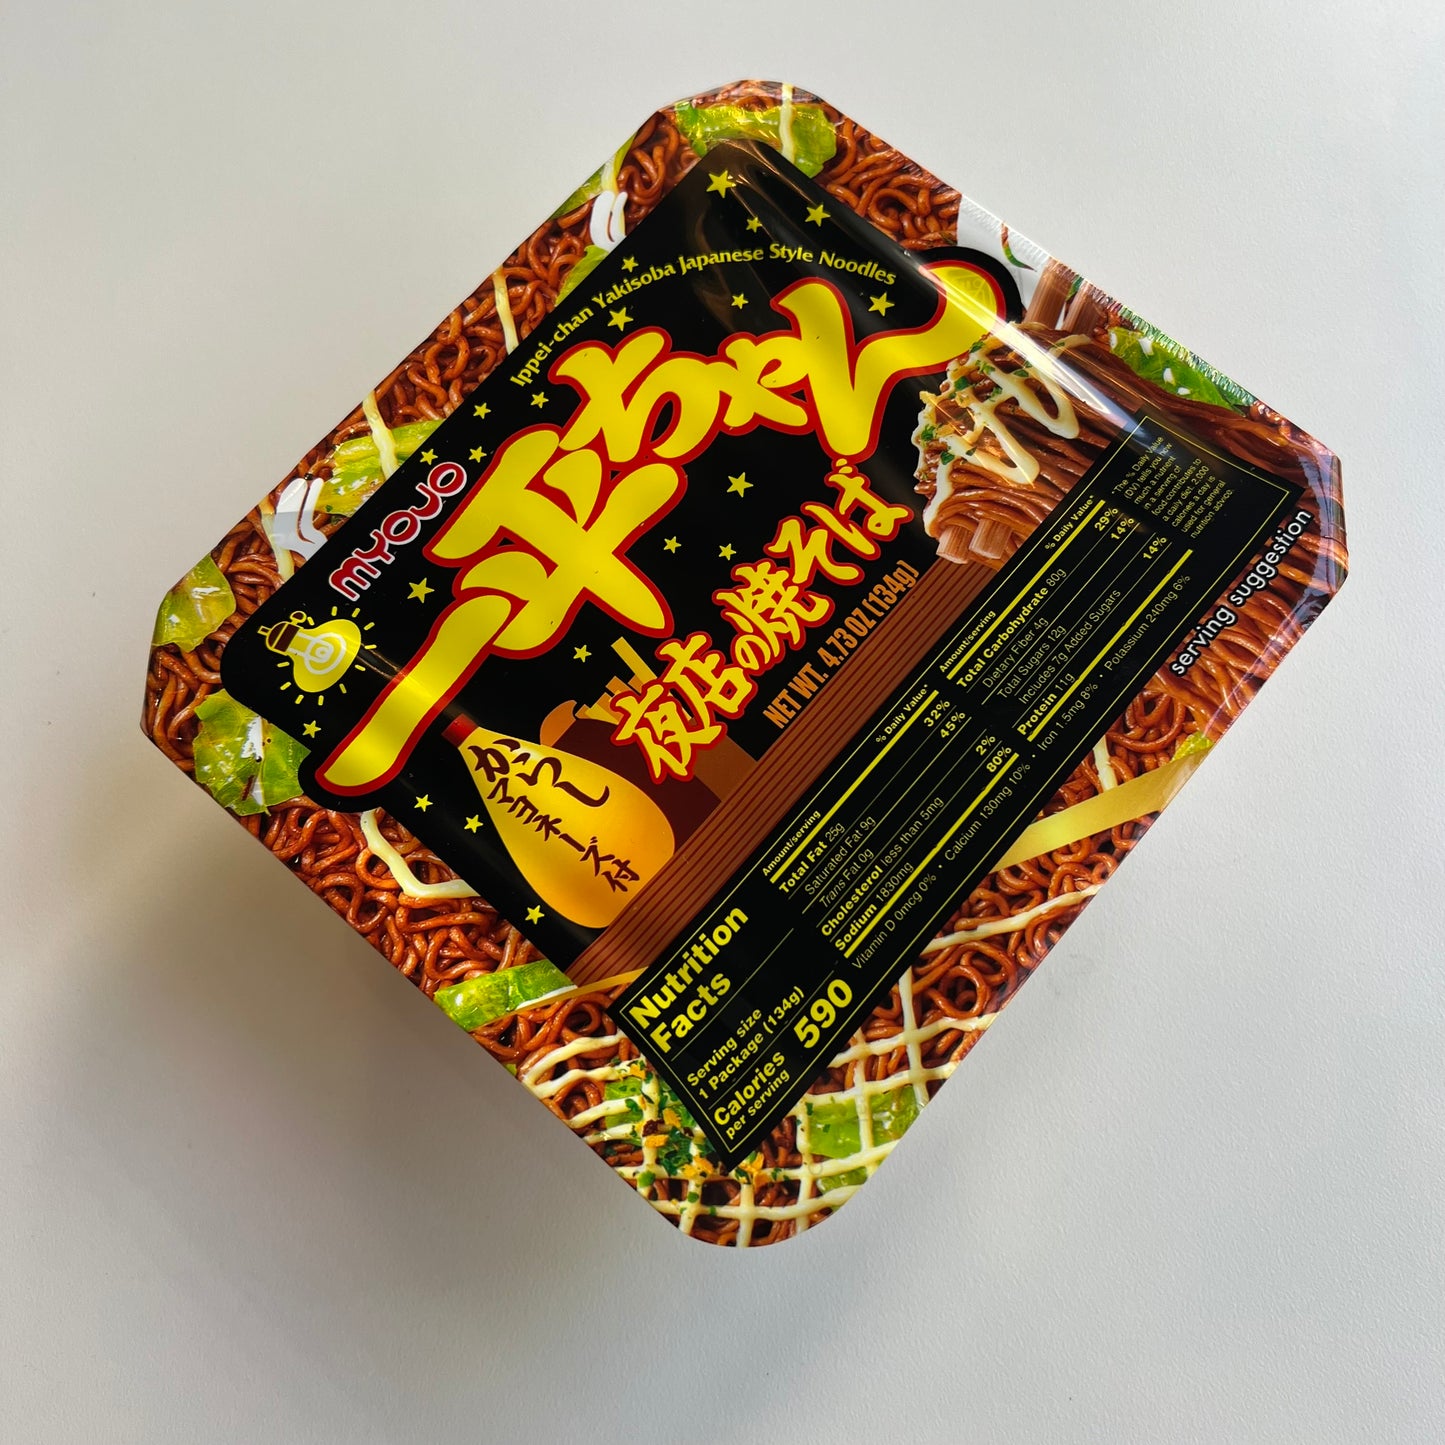 Myojo | Ippei-chan Yakisoba Japanese Noodles